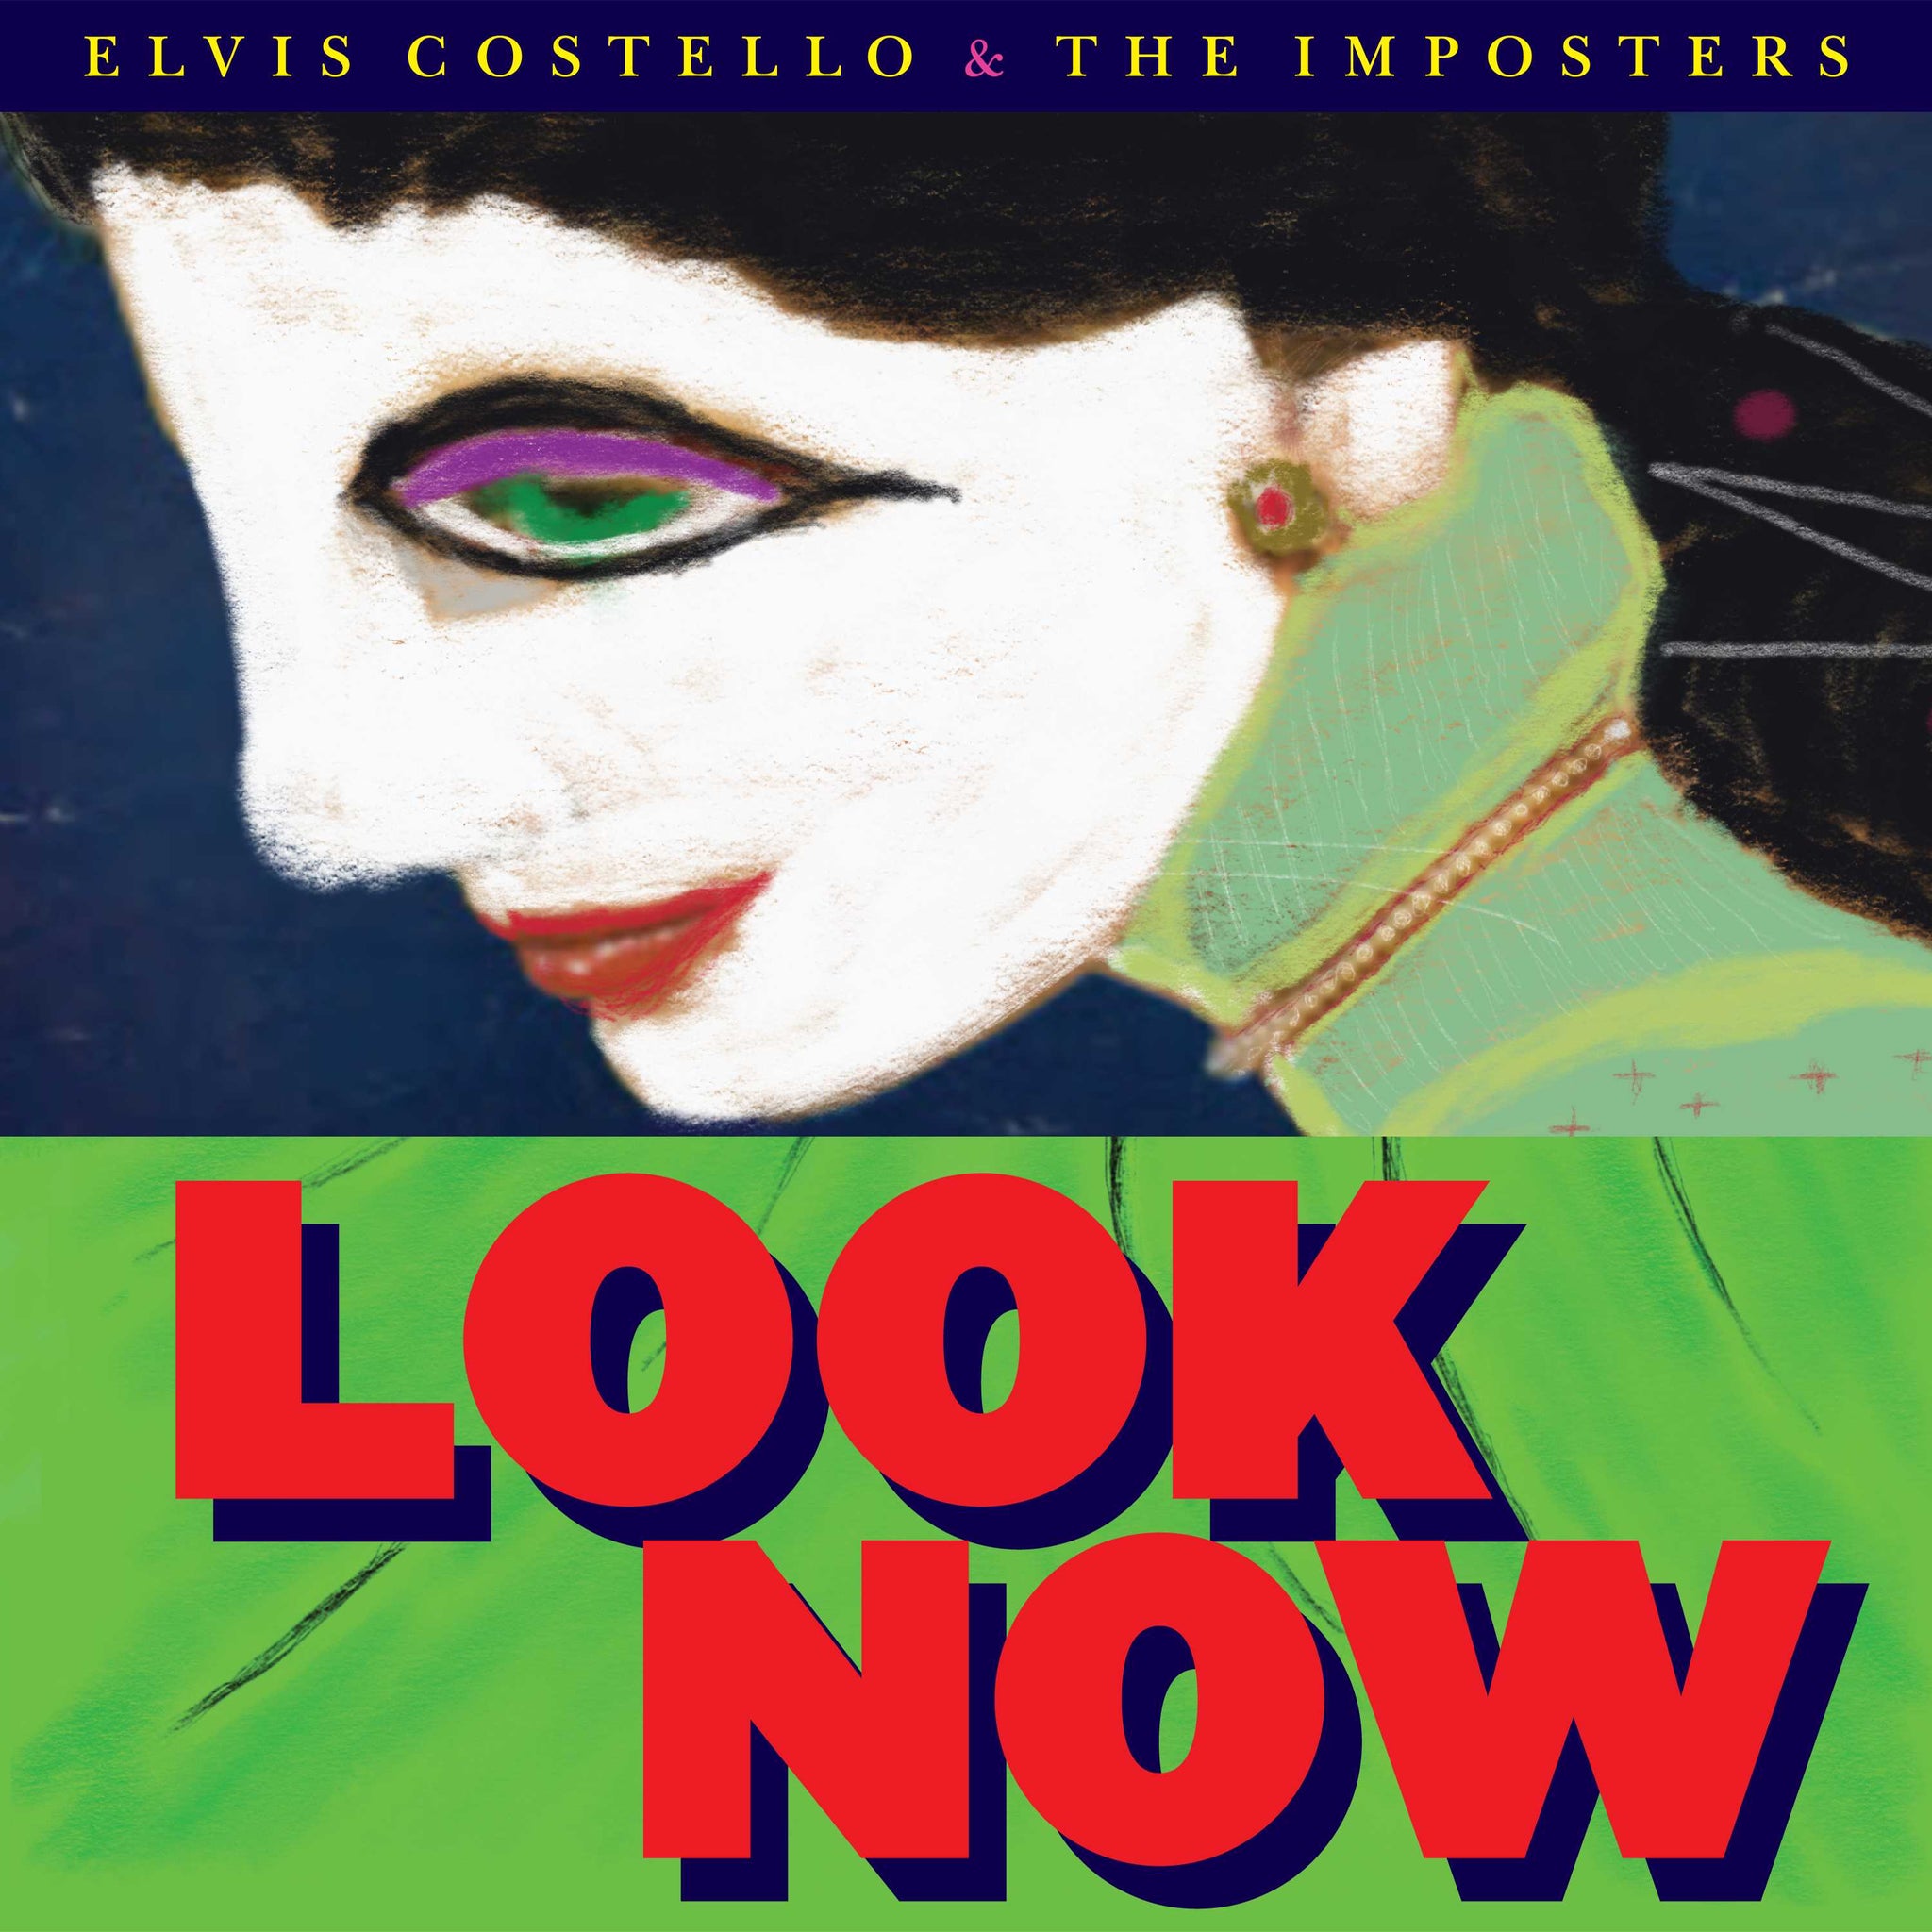 Elvis Costello & The Imposters - Look Now - New LP Record 2018 Concord Vinyl - Rock